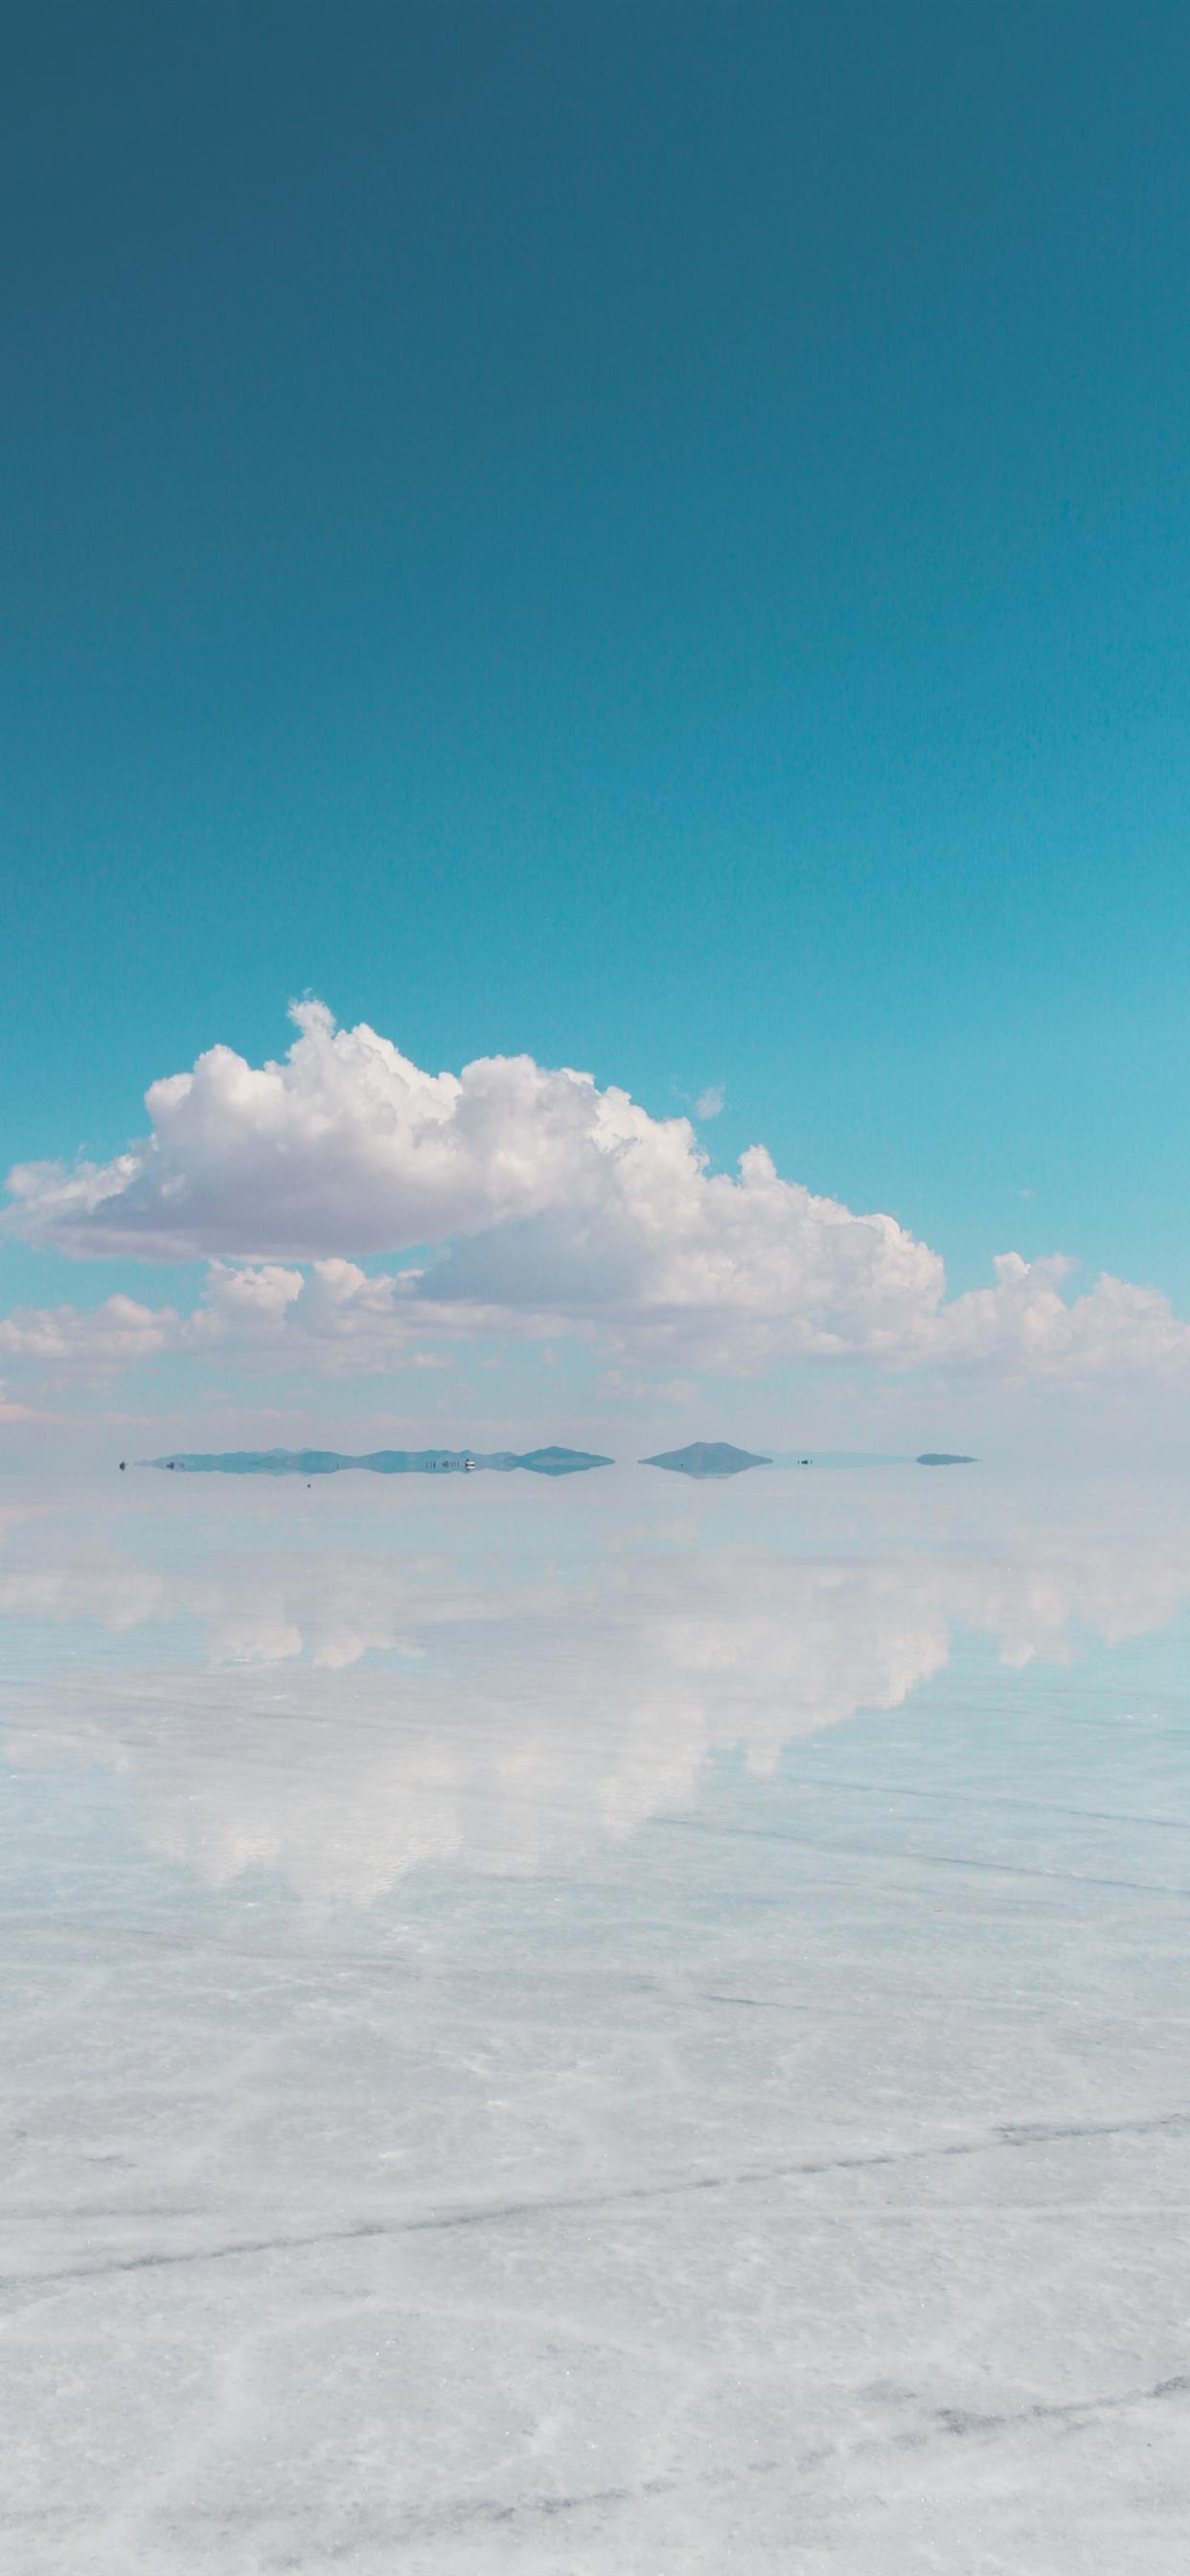 Uyuni Salt Flat Bolivia iPhone X Wallpaper